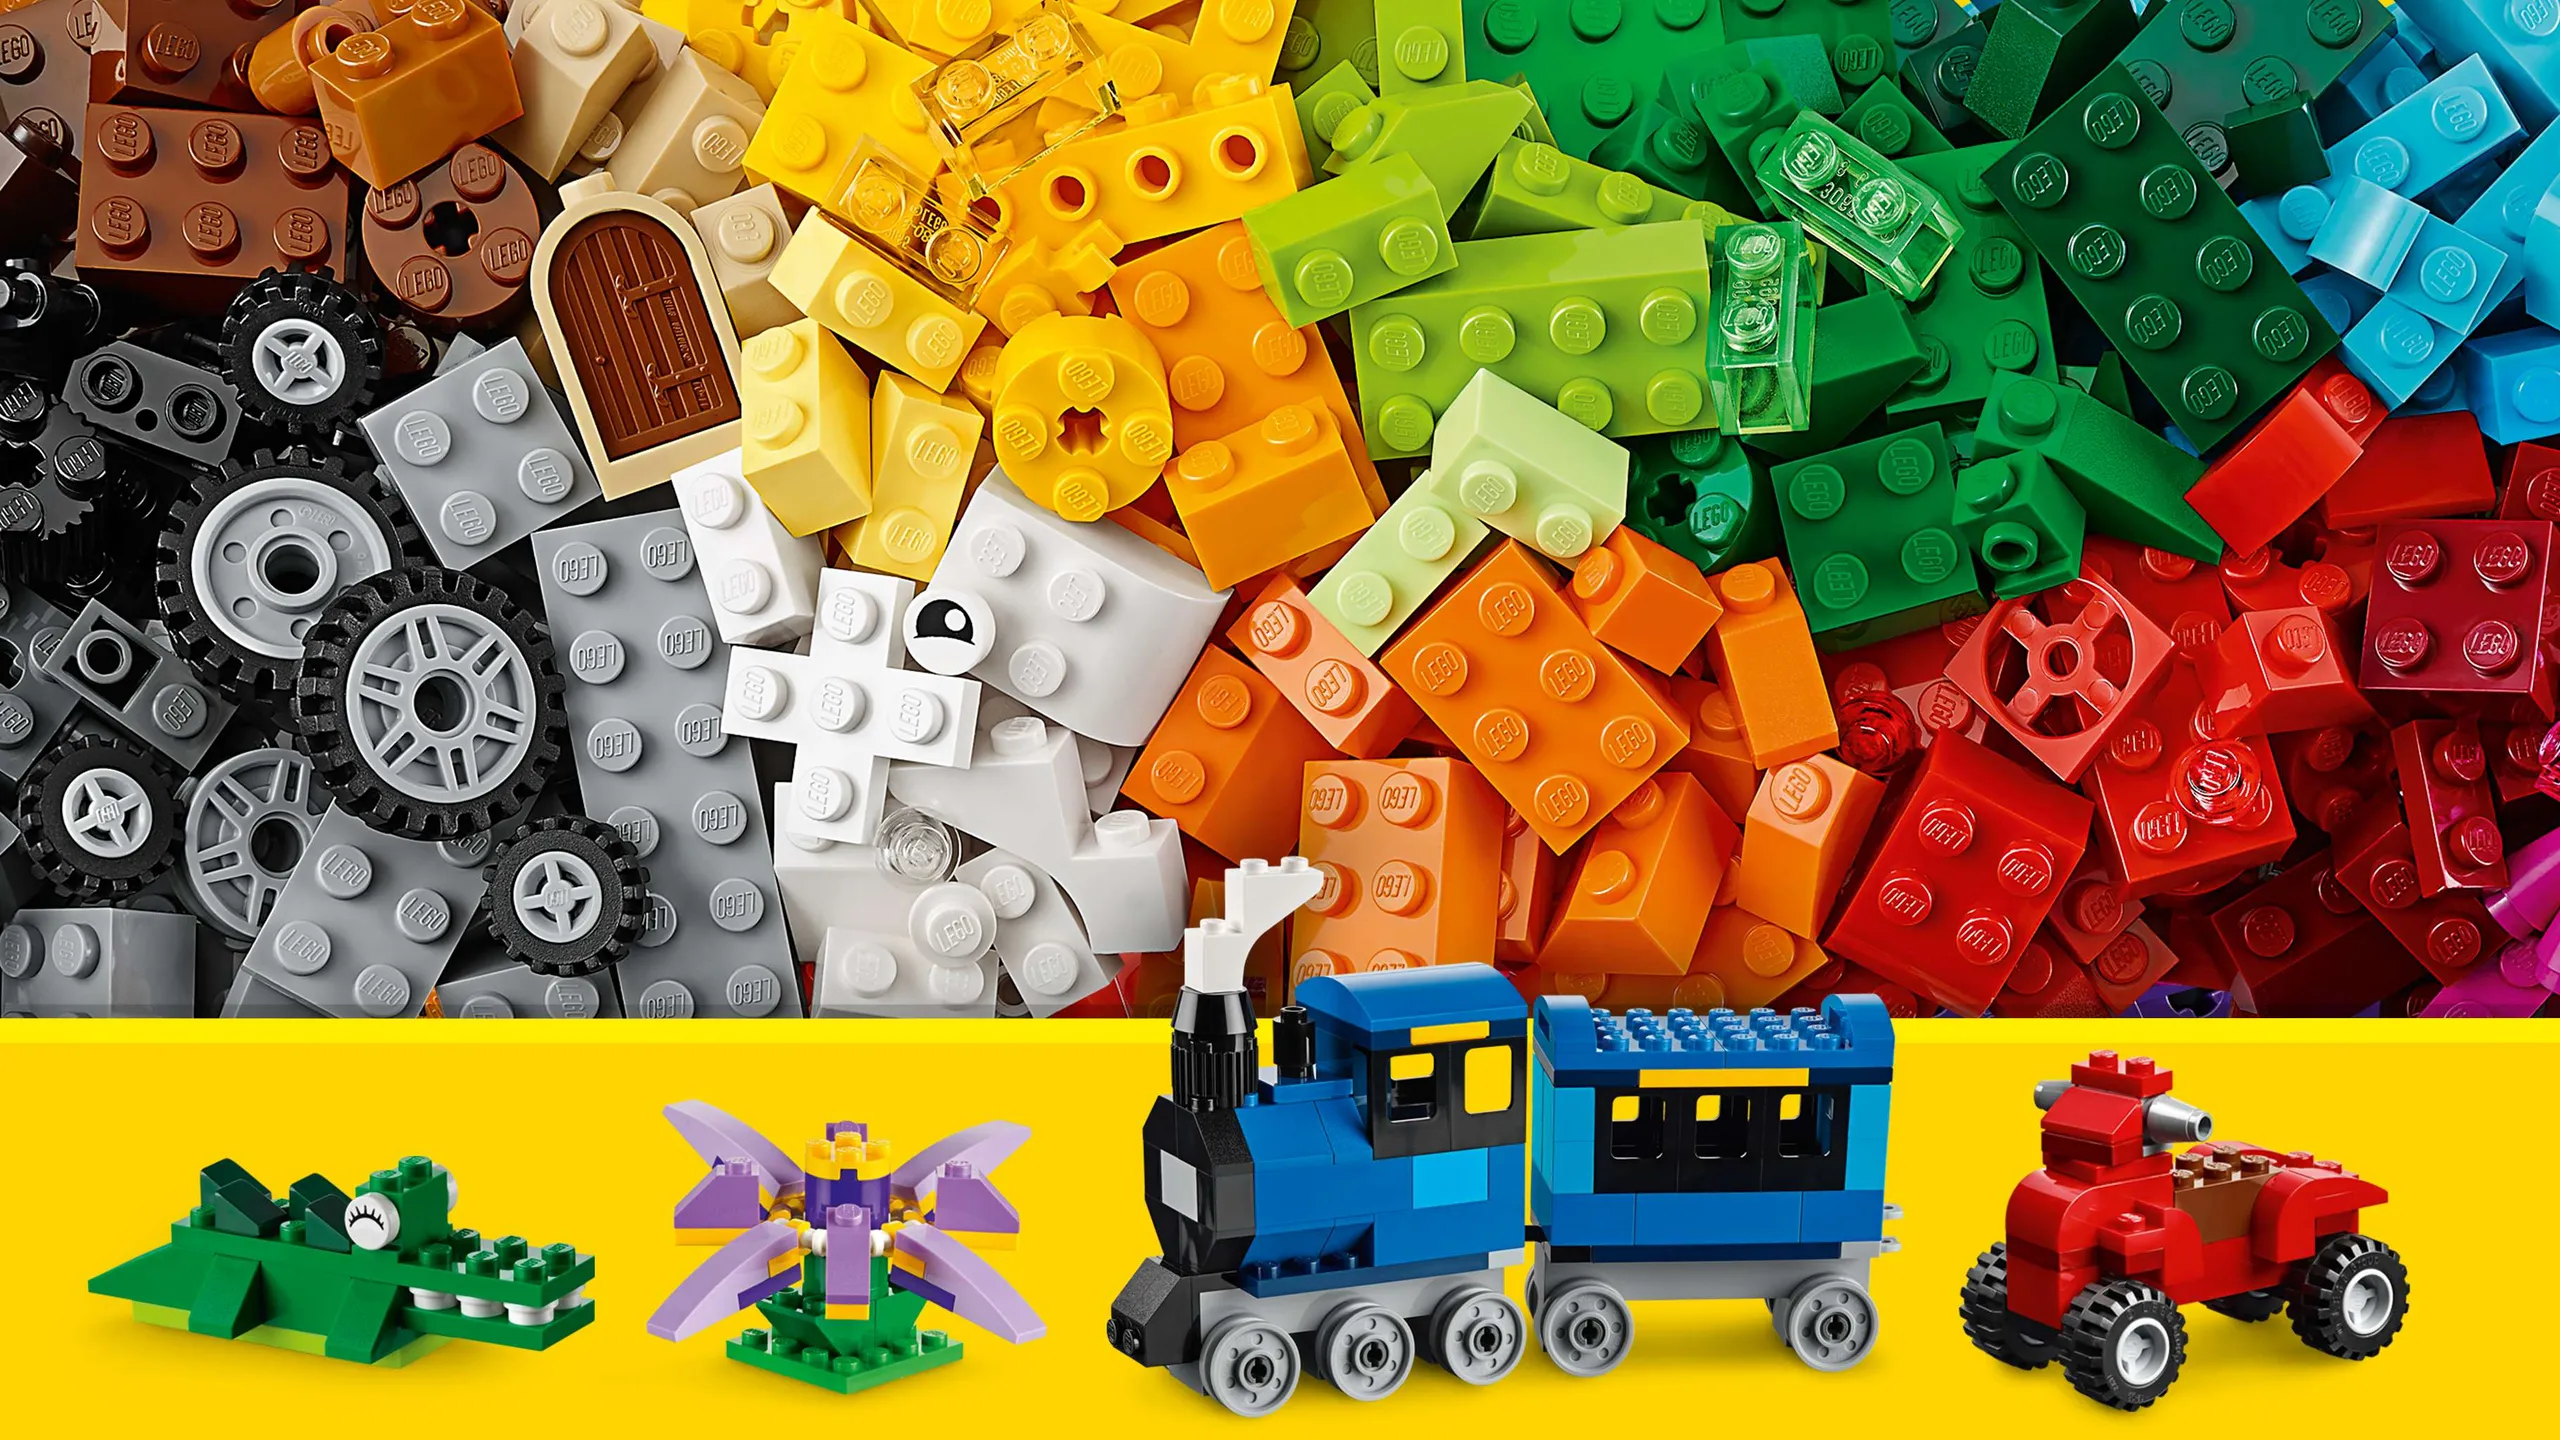 LEGO Classic Medium Creative Brick Box - 10696 - Use a mix of different colored bricks to build a crocodile, flower, train or ATV.